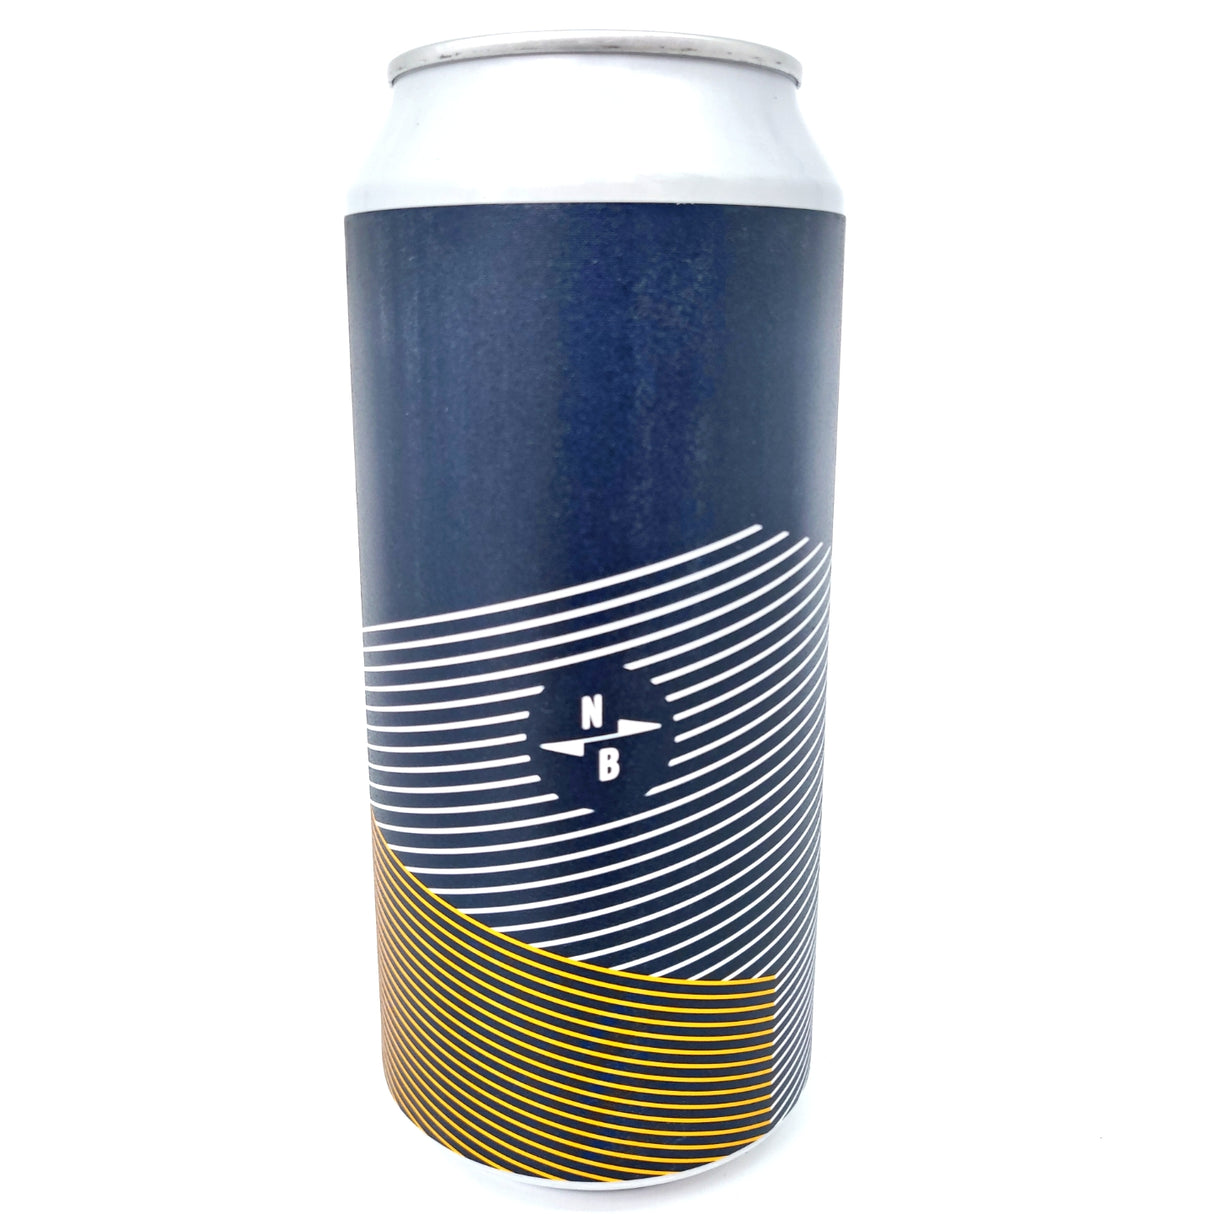 North Brewing Co x Fuerst Wiacek Kolsch 5% (440ml can)-Hop Burns & Black